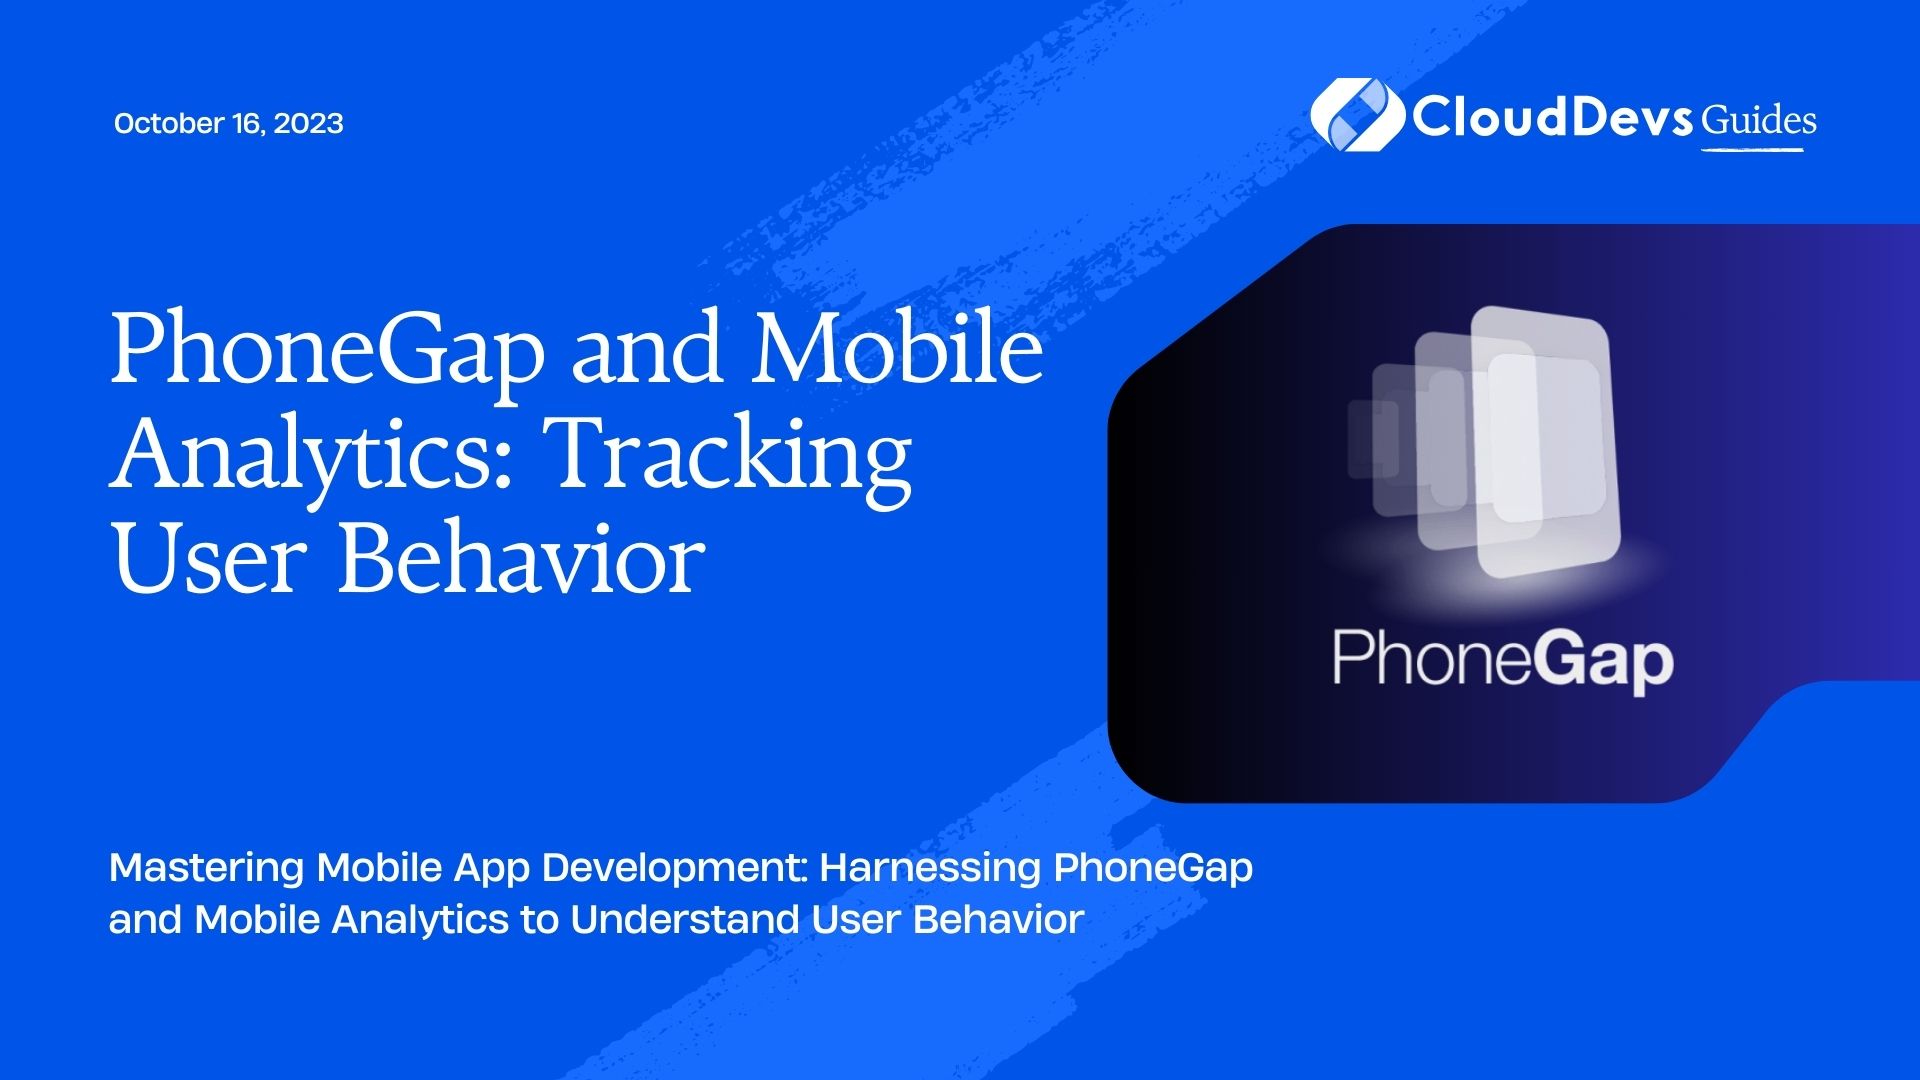 PhoneGap and Mobile Analytics: Tracking User Behavior